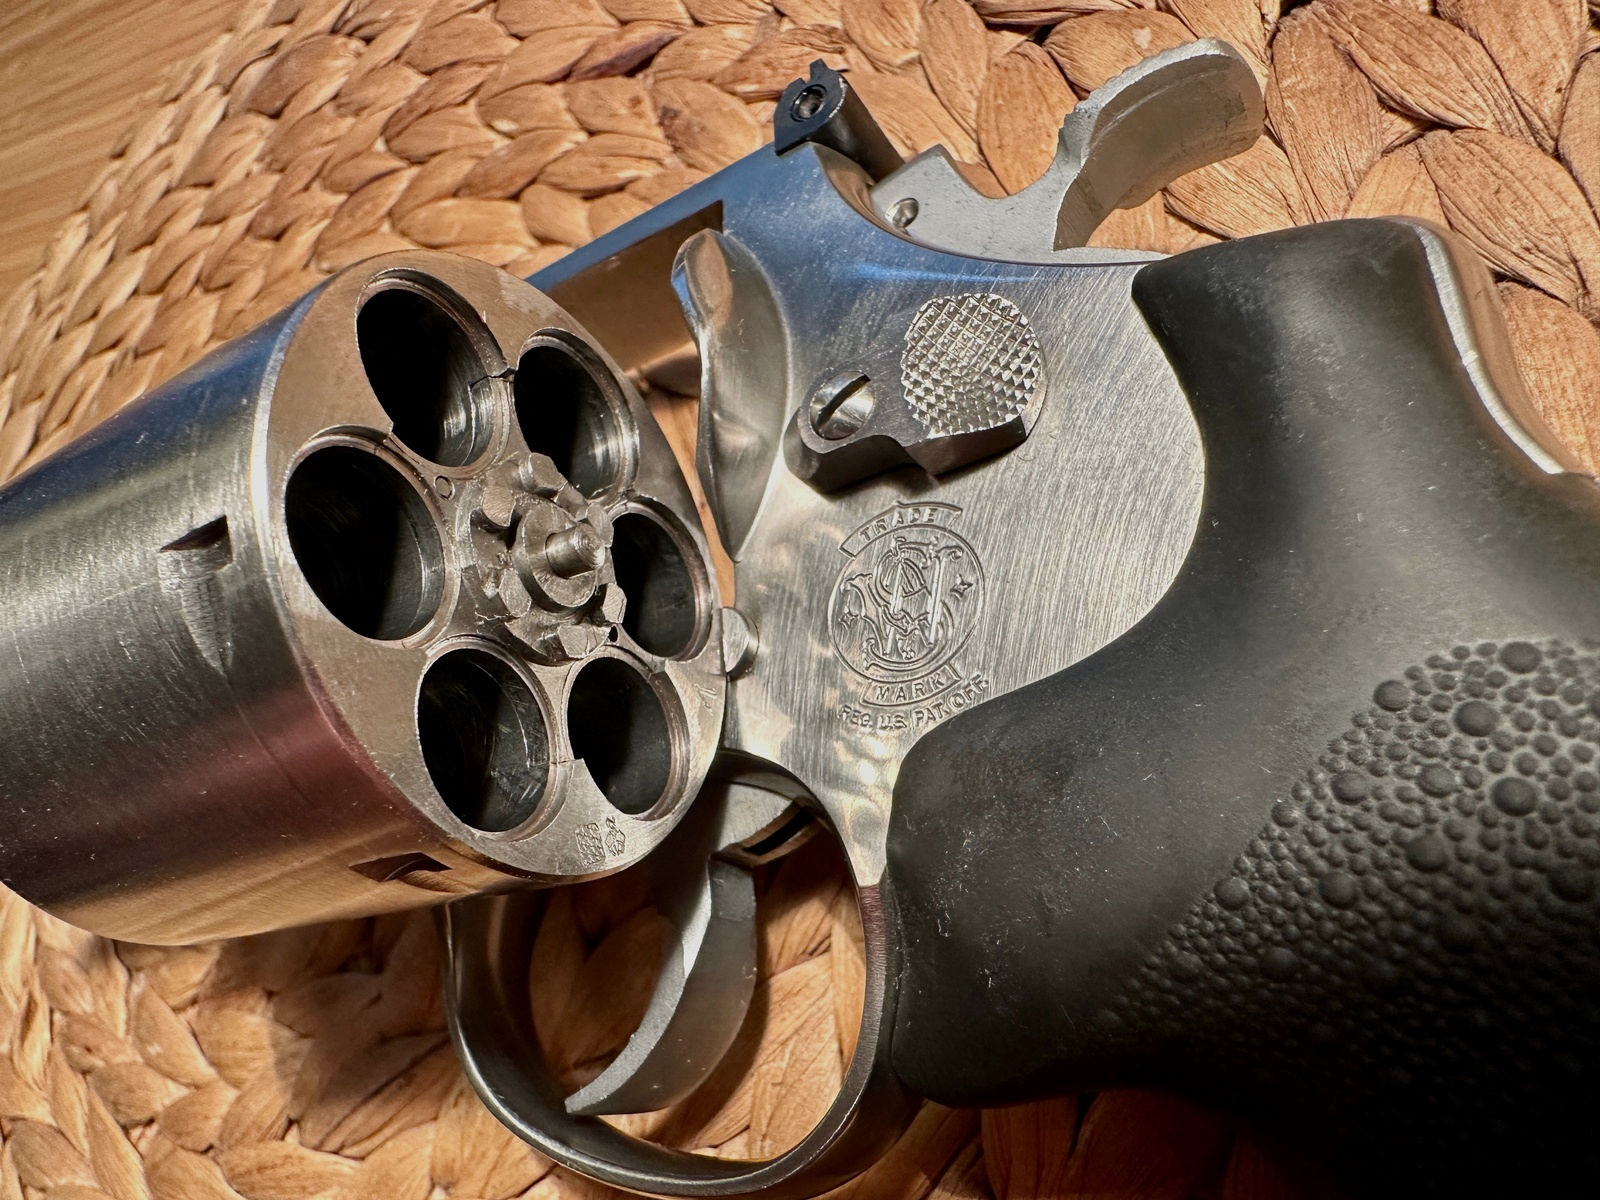 Smith & Wesson 629-2 Classic Magnum 7 1/2" Full Lug .44 Mag. Revolver (No. 420 von 750)